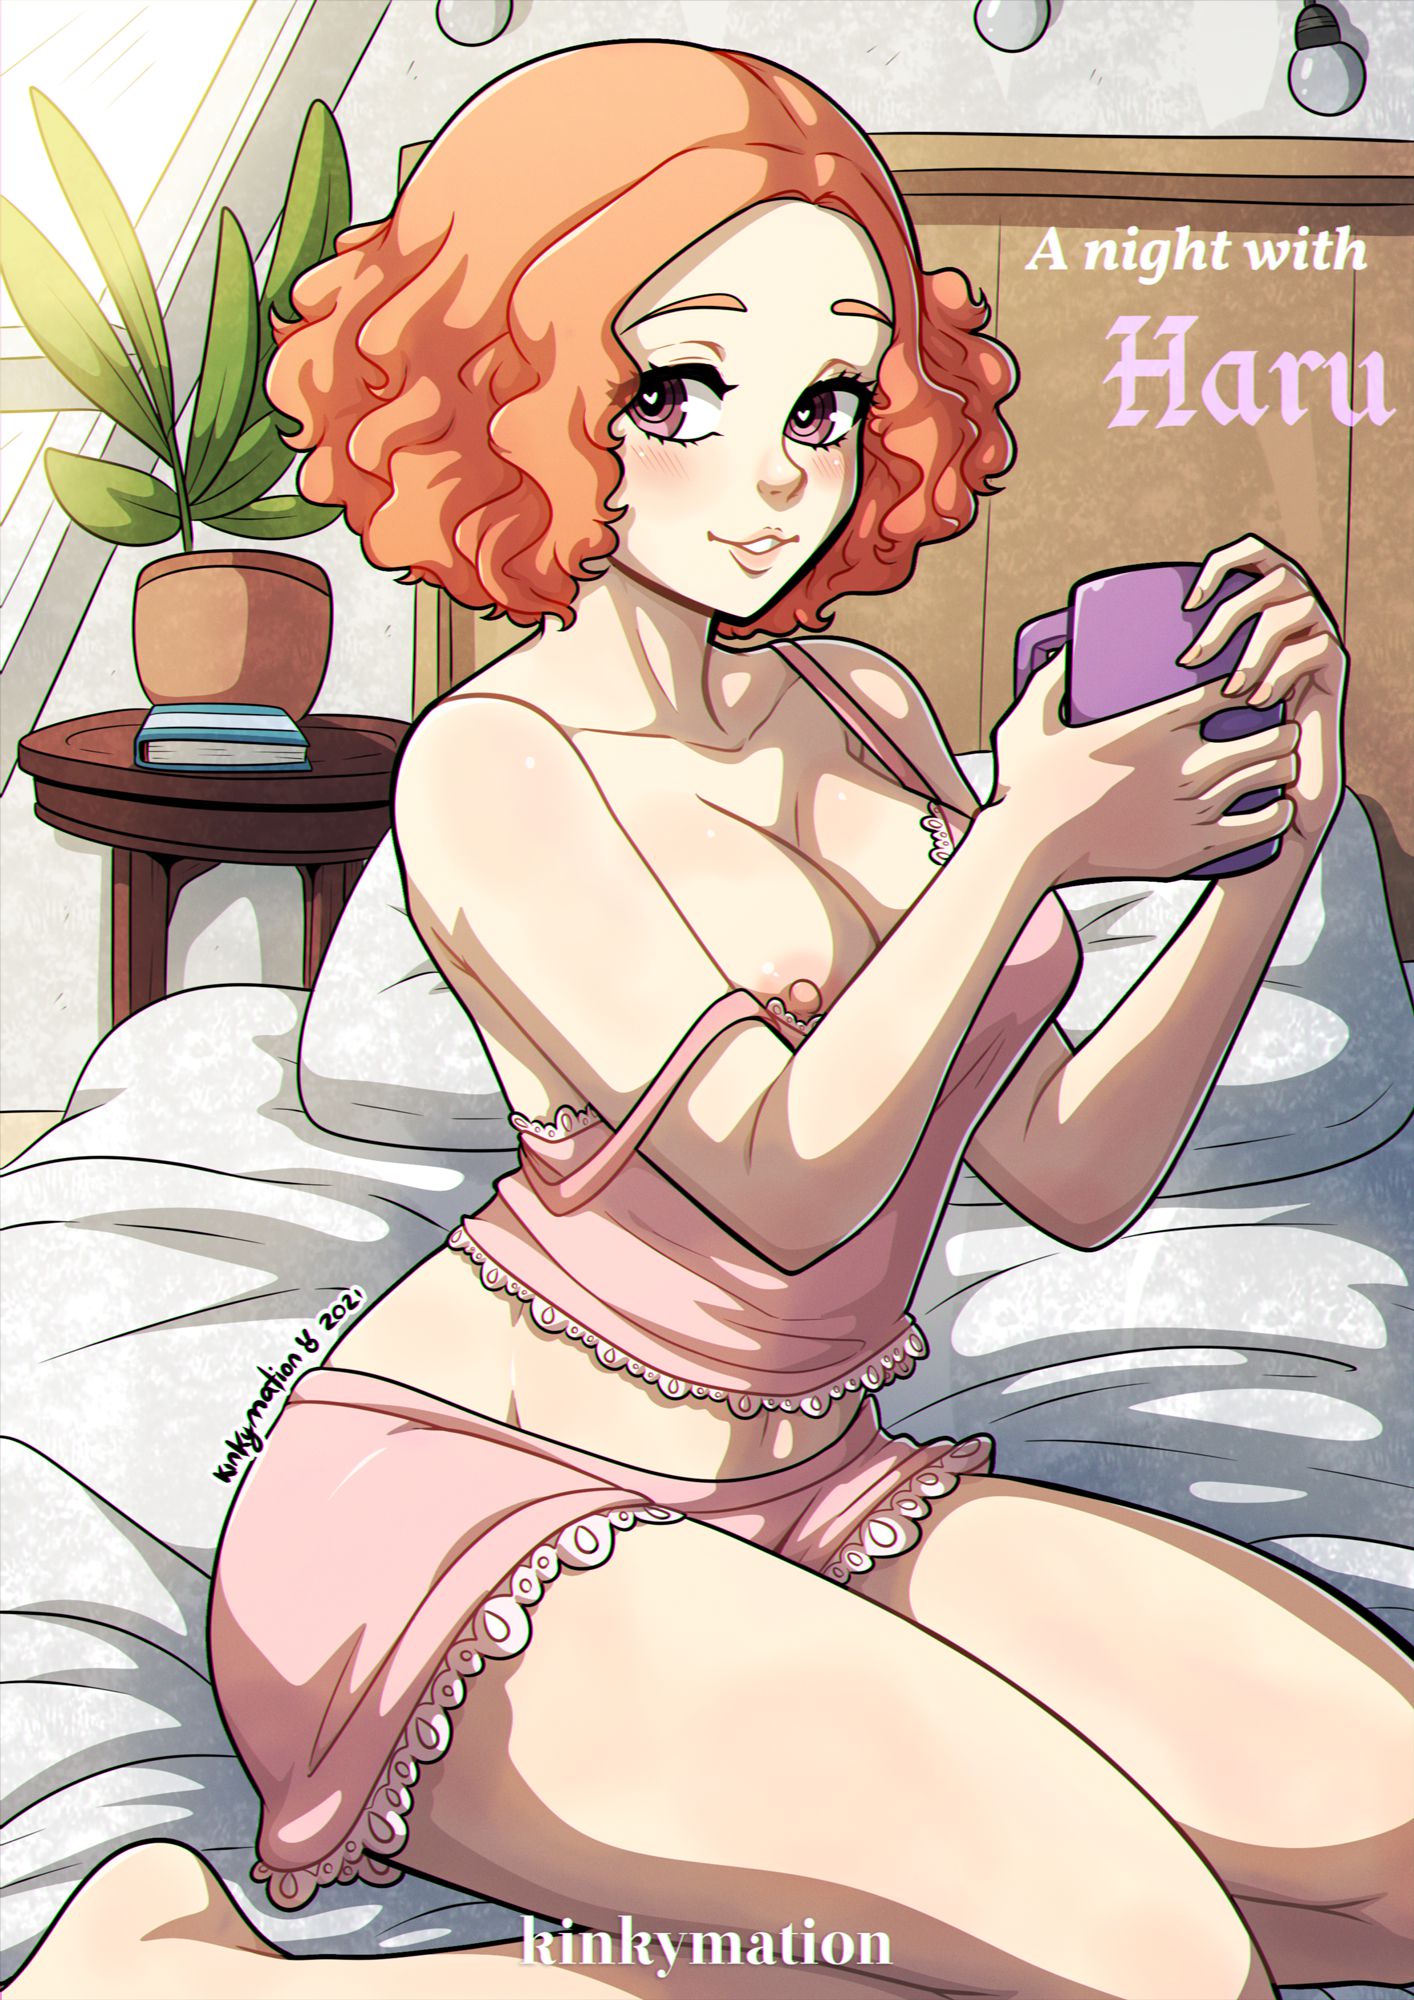 Persona 5 haru naked